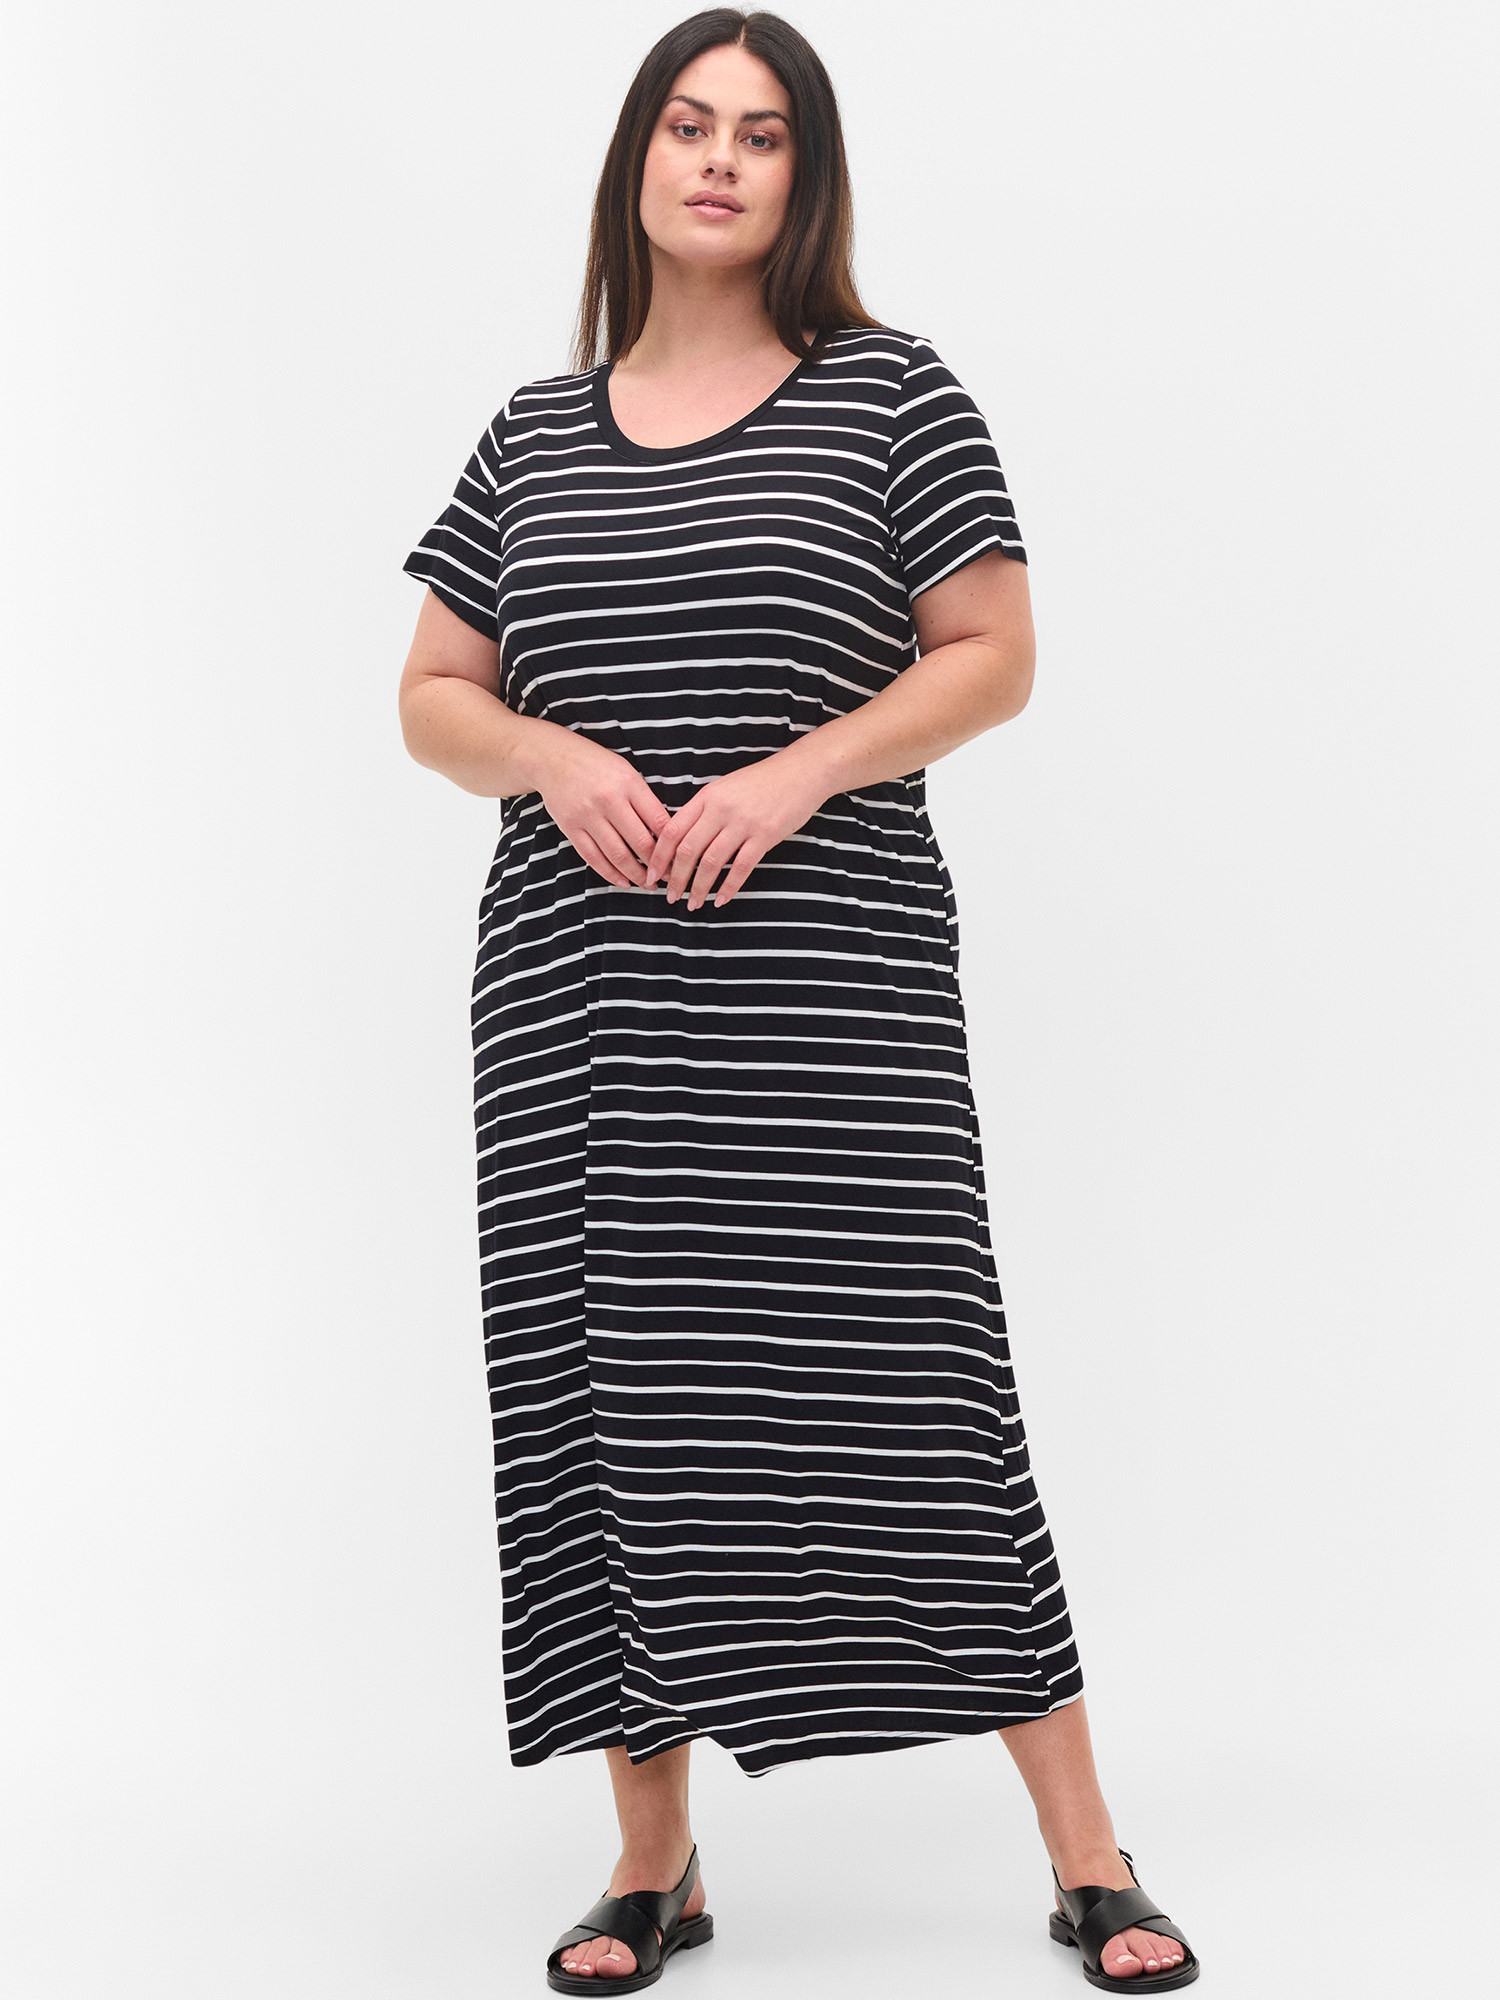 Vfreja - Lang mørkeblå kjole i viskose jersey med hvite striper